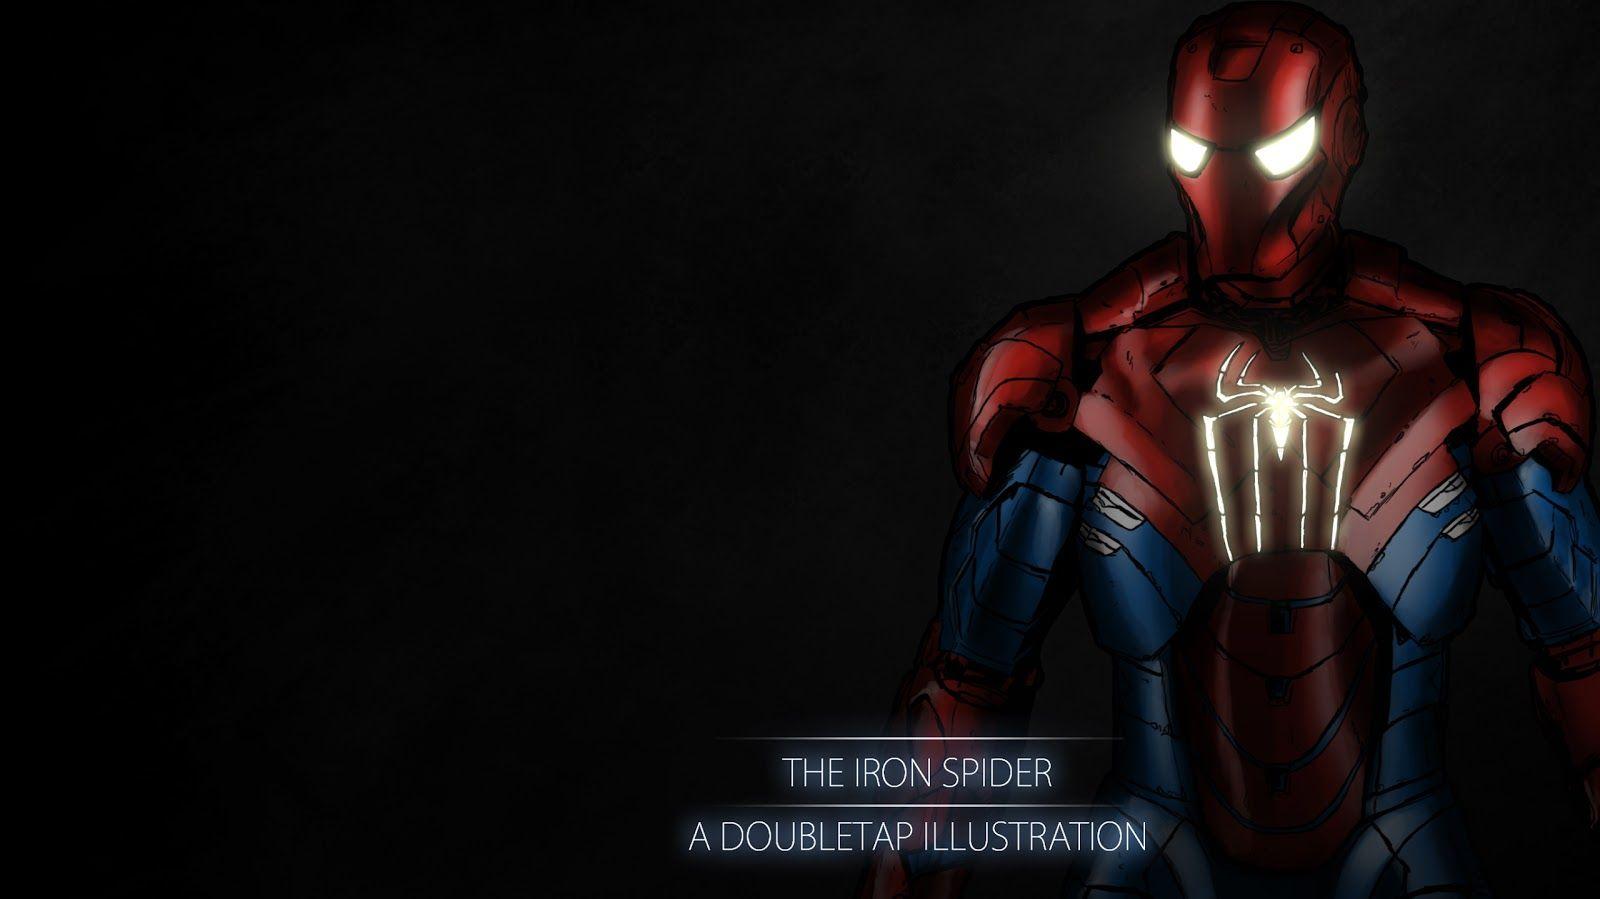 Iron Spider suit in Civil War?